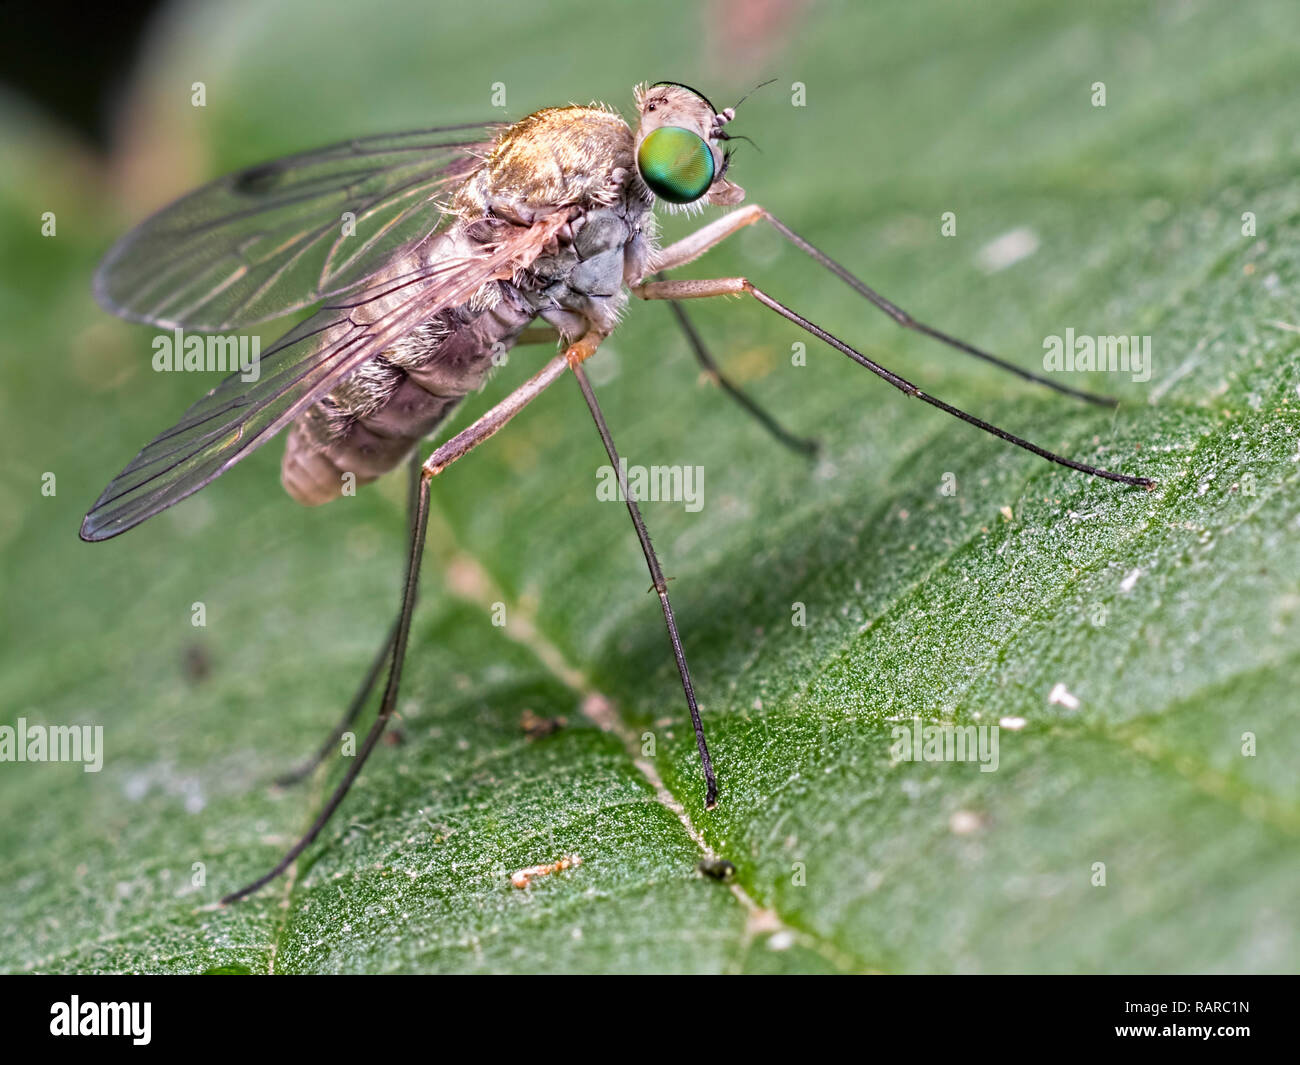 A Green eyed long-legged fly (Dolichopus) discovered at Blashford Lakes nature reserve Stock Photo